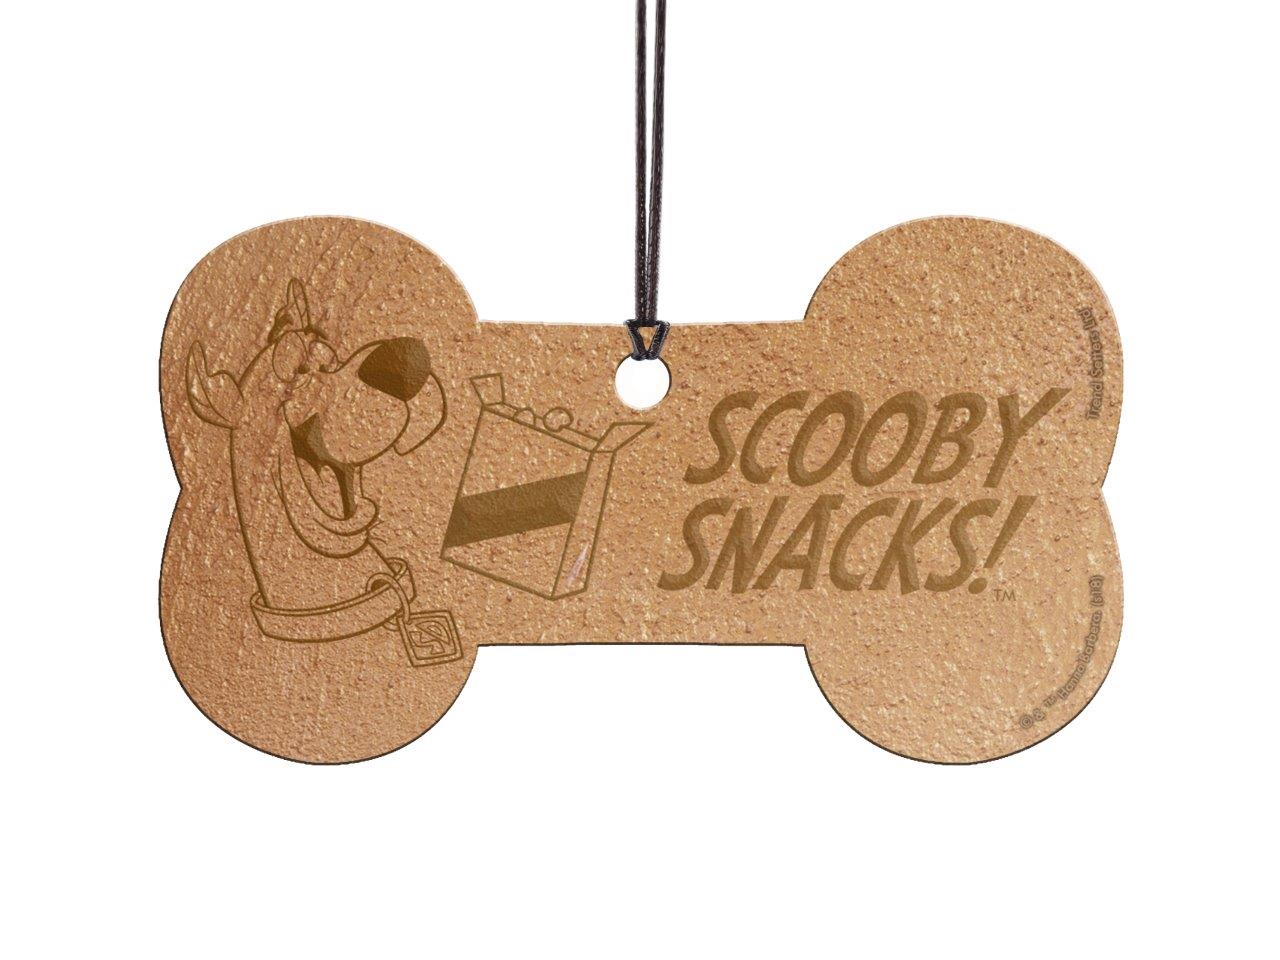 Scooby-Doo (Dog Treat)  Hanging Acrylic ACPBONE342